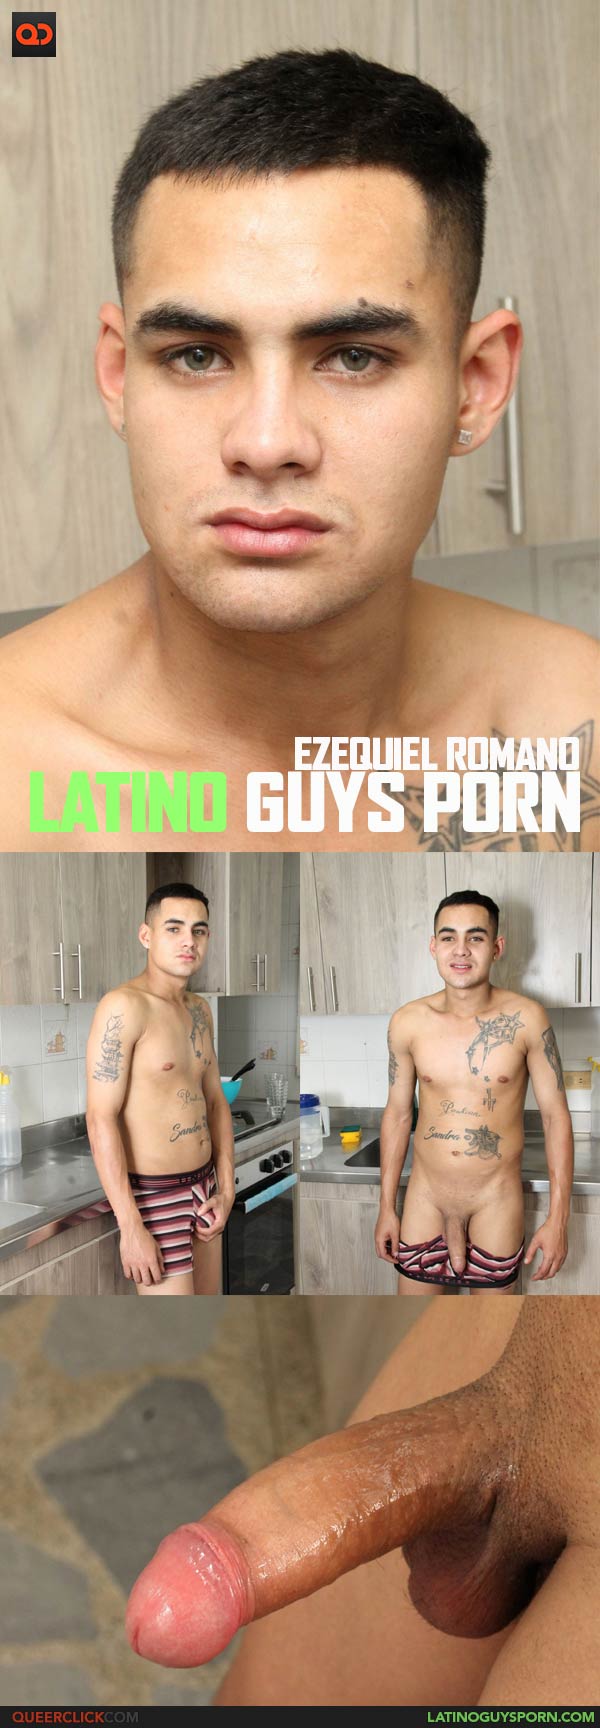 Latino Guys Porn: Ezequiel Romano